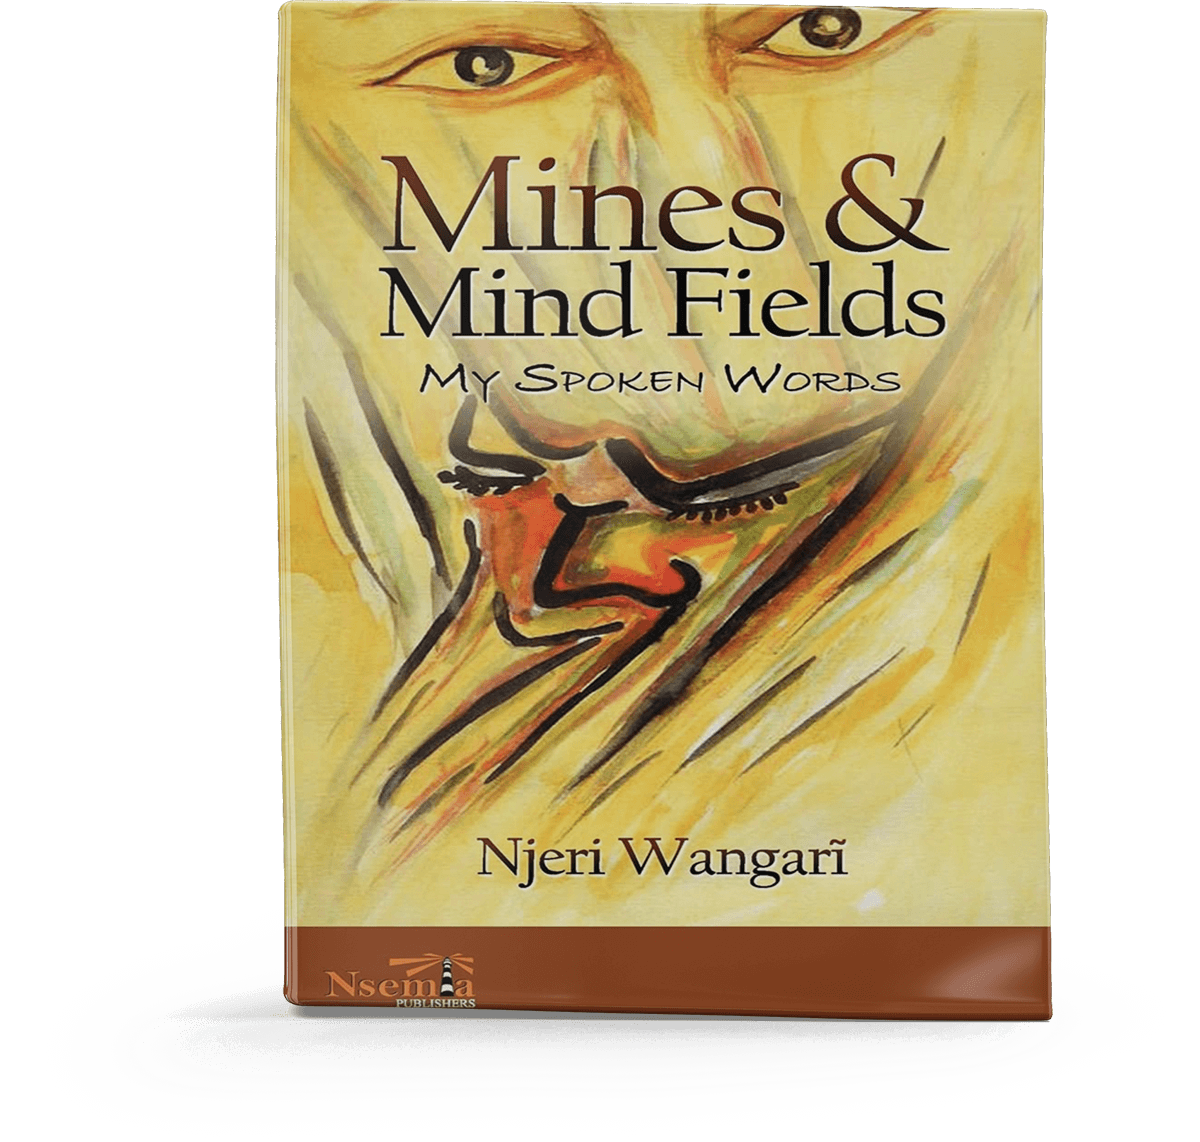 Mines & Mind Fields: My Spoken Words by Njeri Wangari